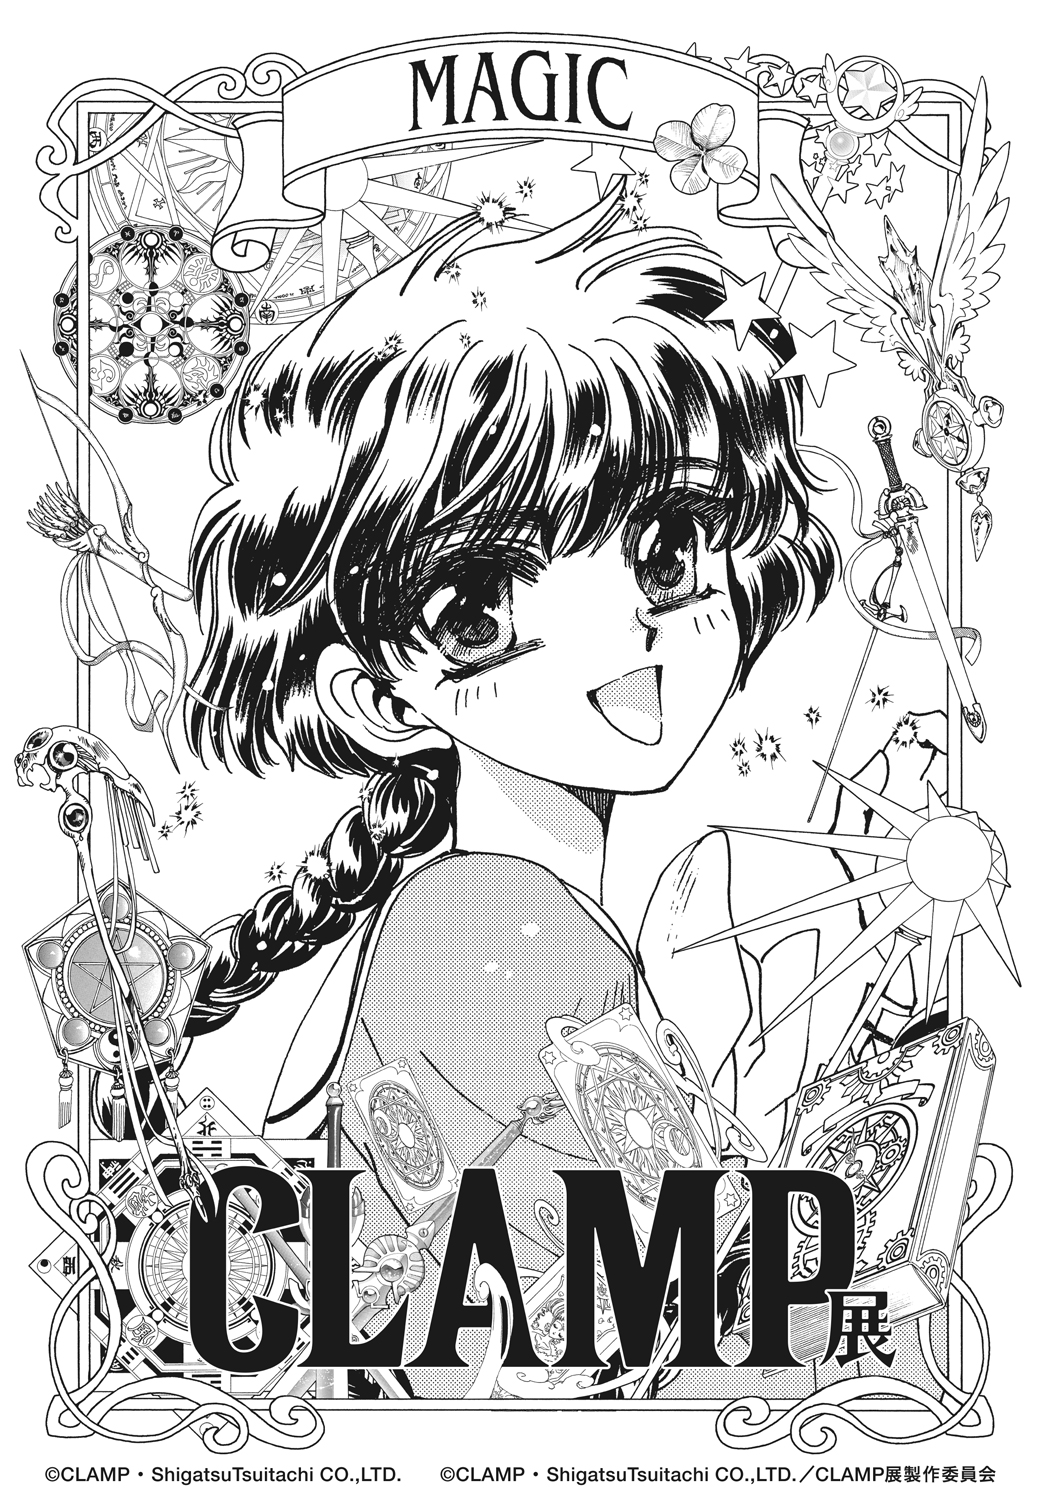 CLAMP展 | 「M」は、MAGIC。CLAMPが、魔法をかける。 | ©CLAMP・ShigatsuTsuitachi CO.,LTD. ©CLAMP・ShigatsuTsuitachi CO.,LTD. / CLAMP展製作委員会